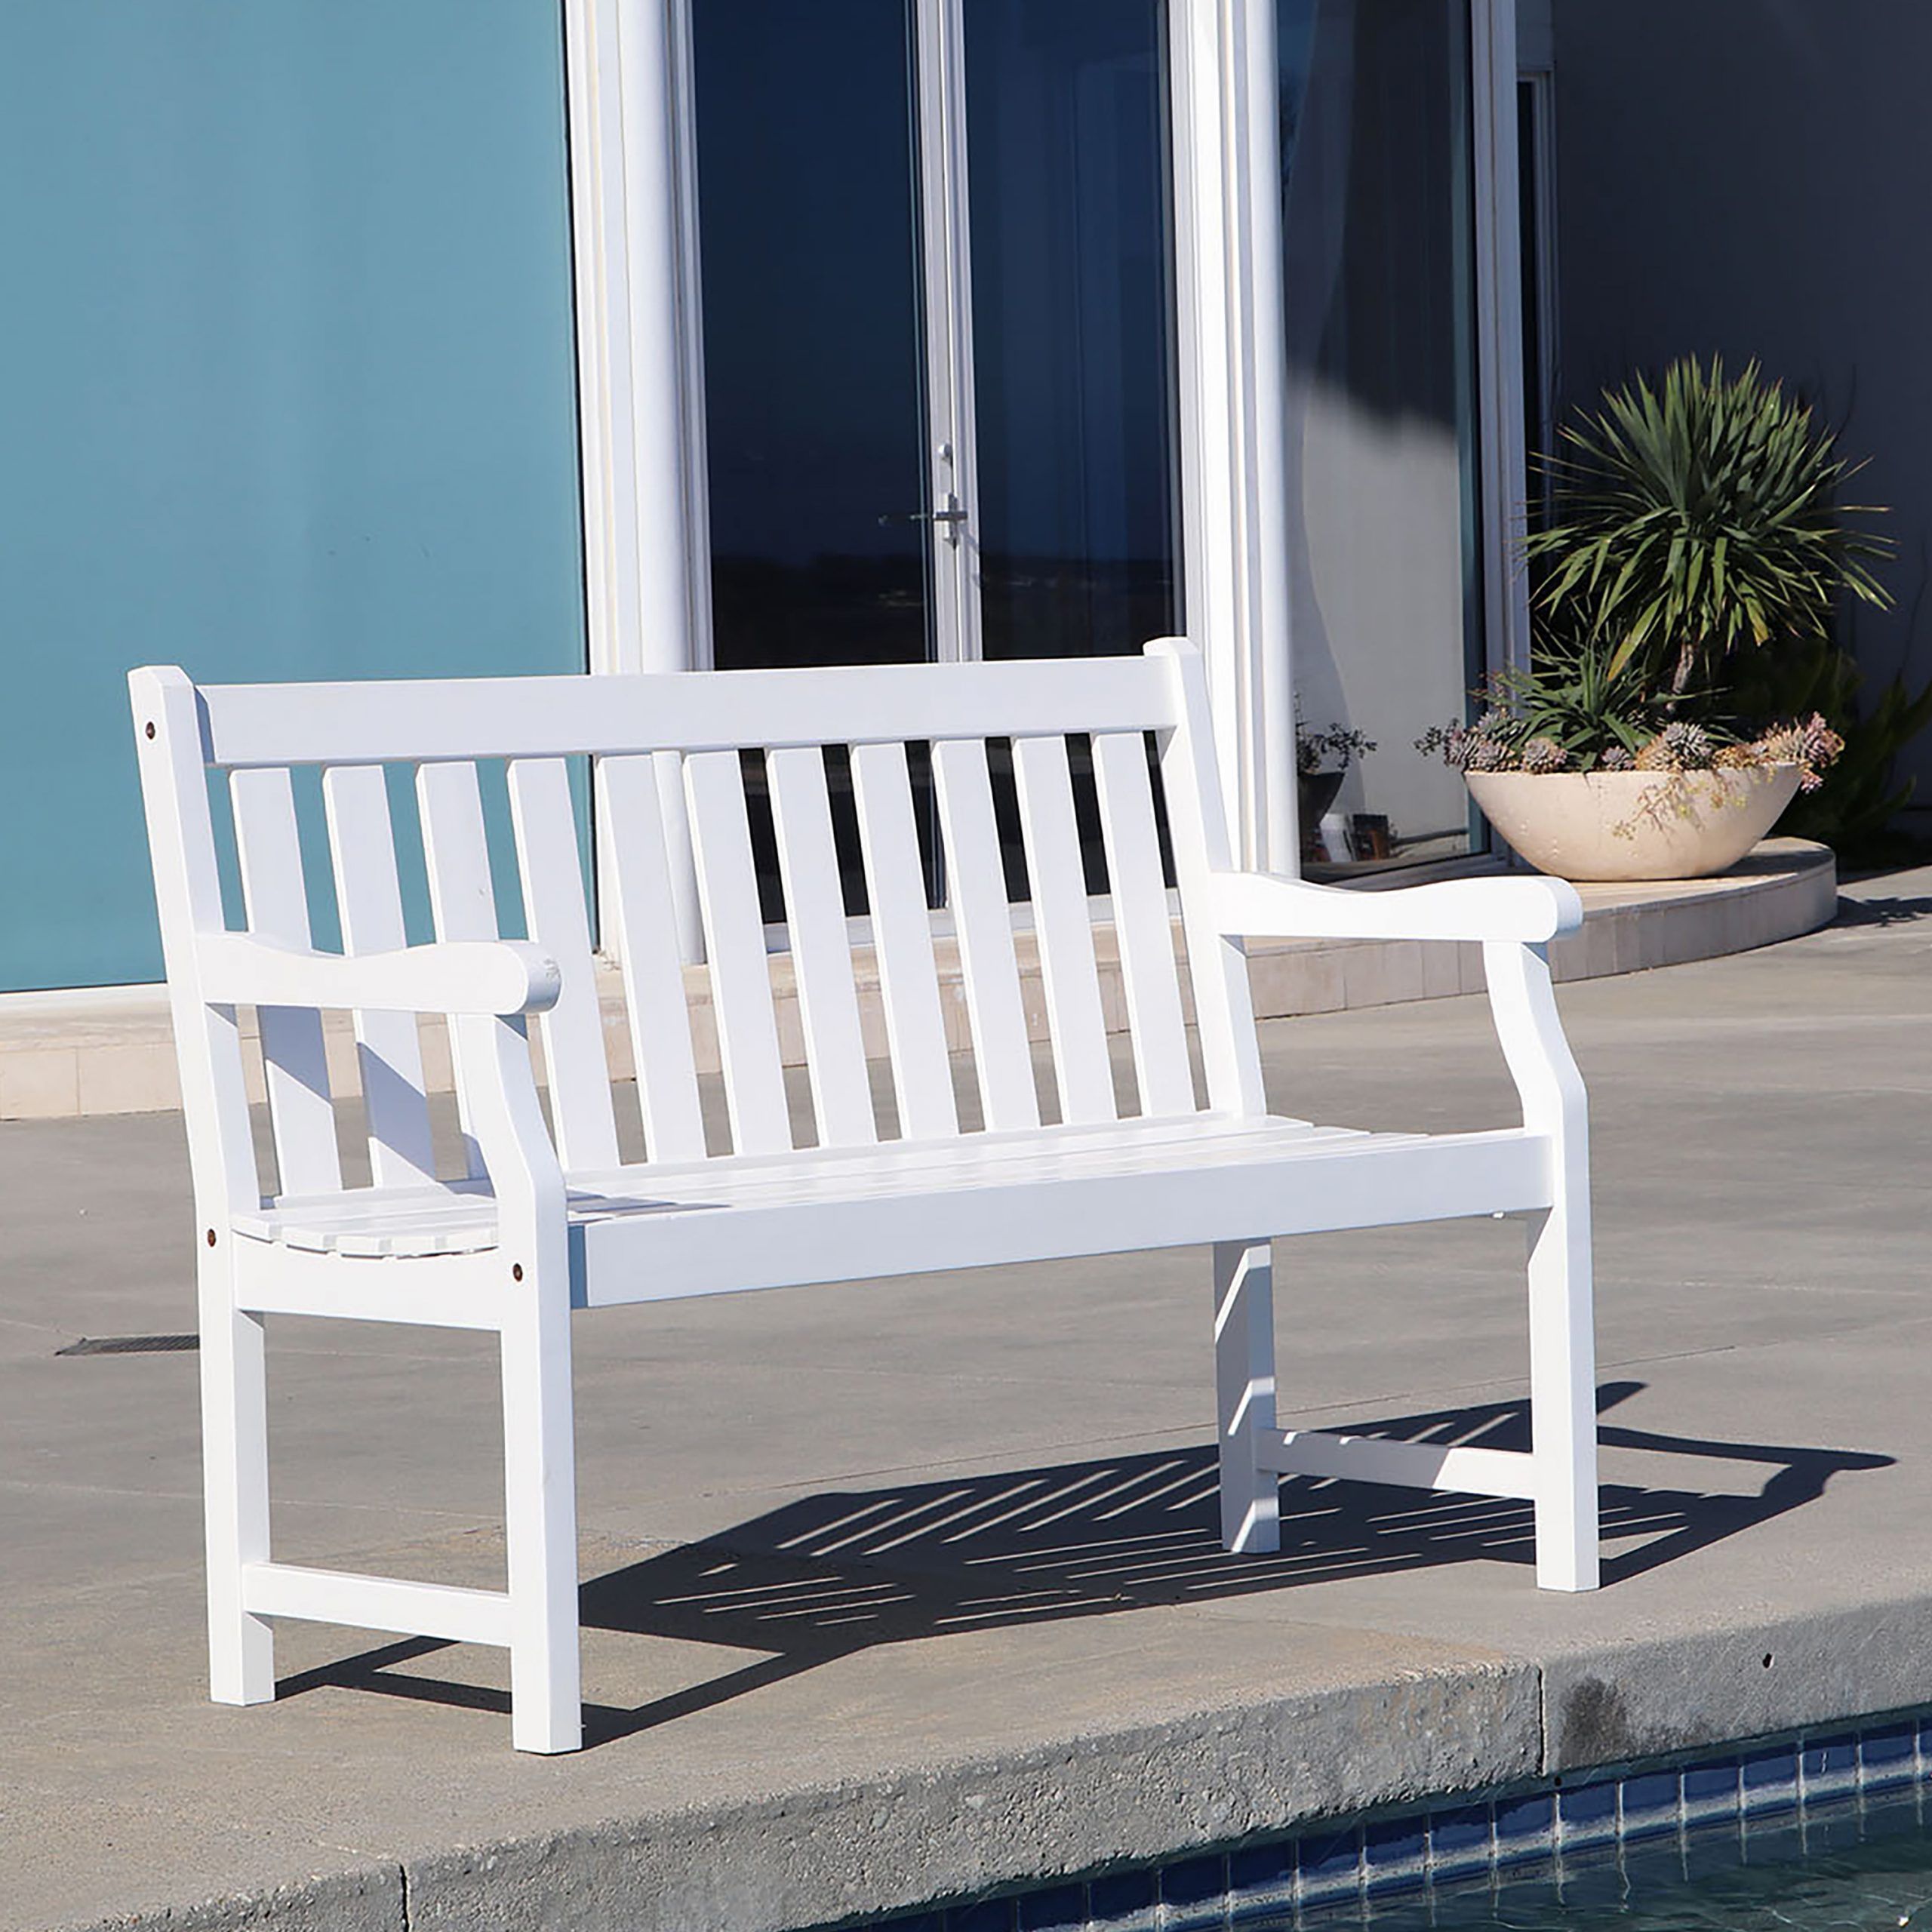 White Wood Soutdoor Seating Sets Regarding Preferred Bradley Eco Friendly 4 Foot Outdoor White Wood Garden Bench – Walmart (View 7 of 15)